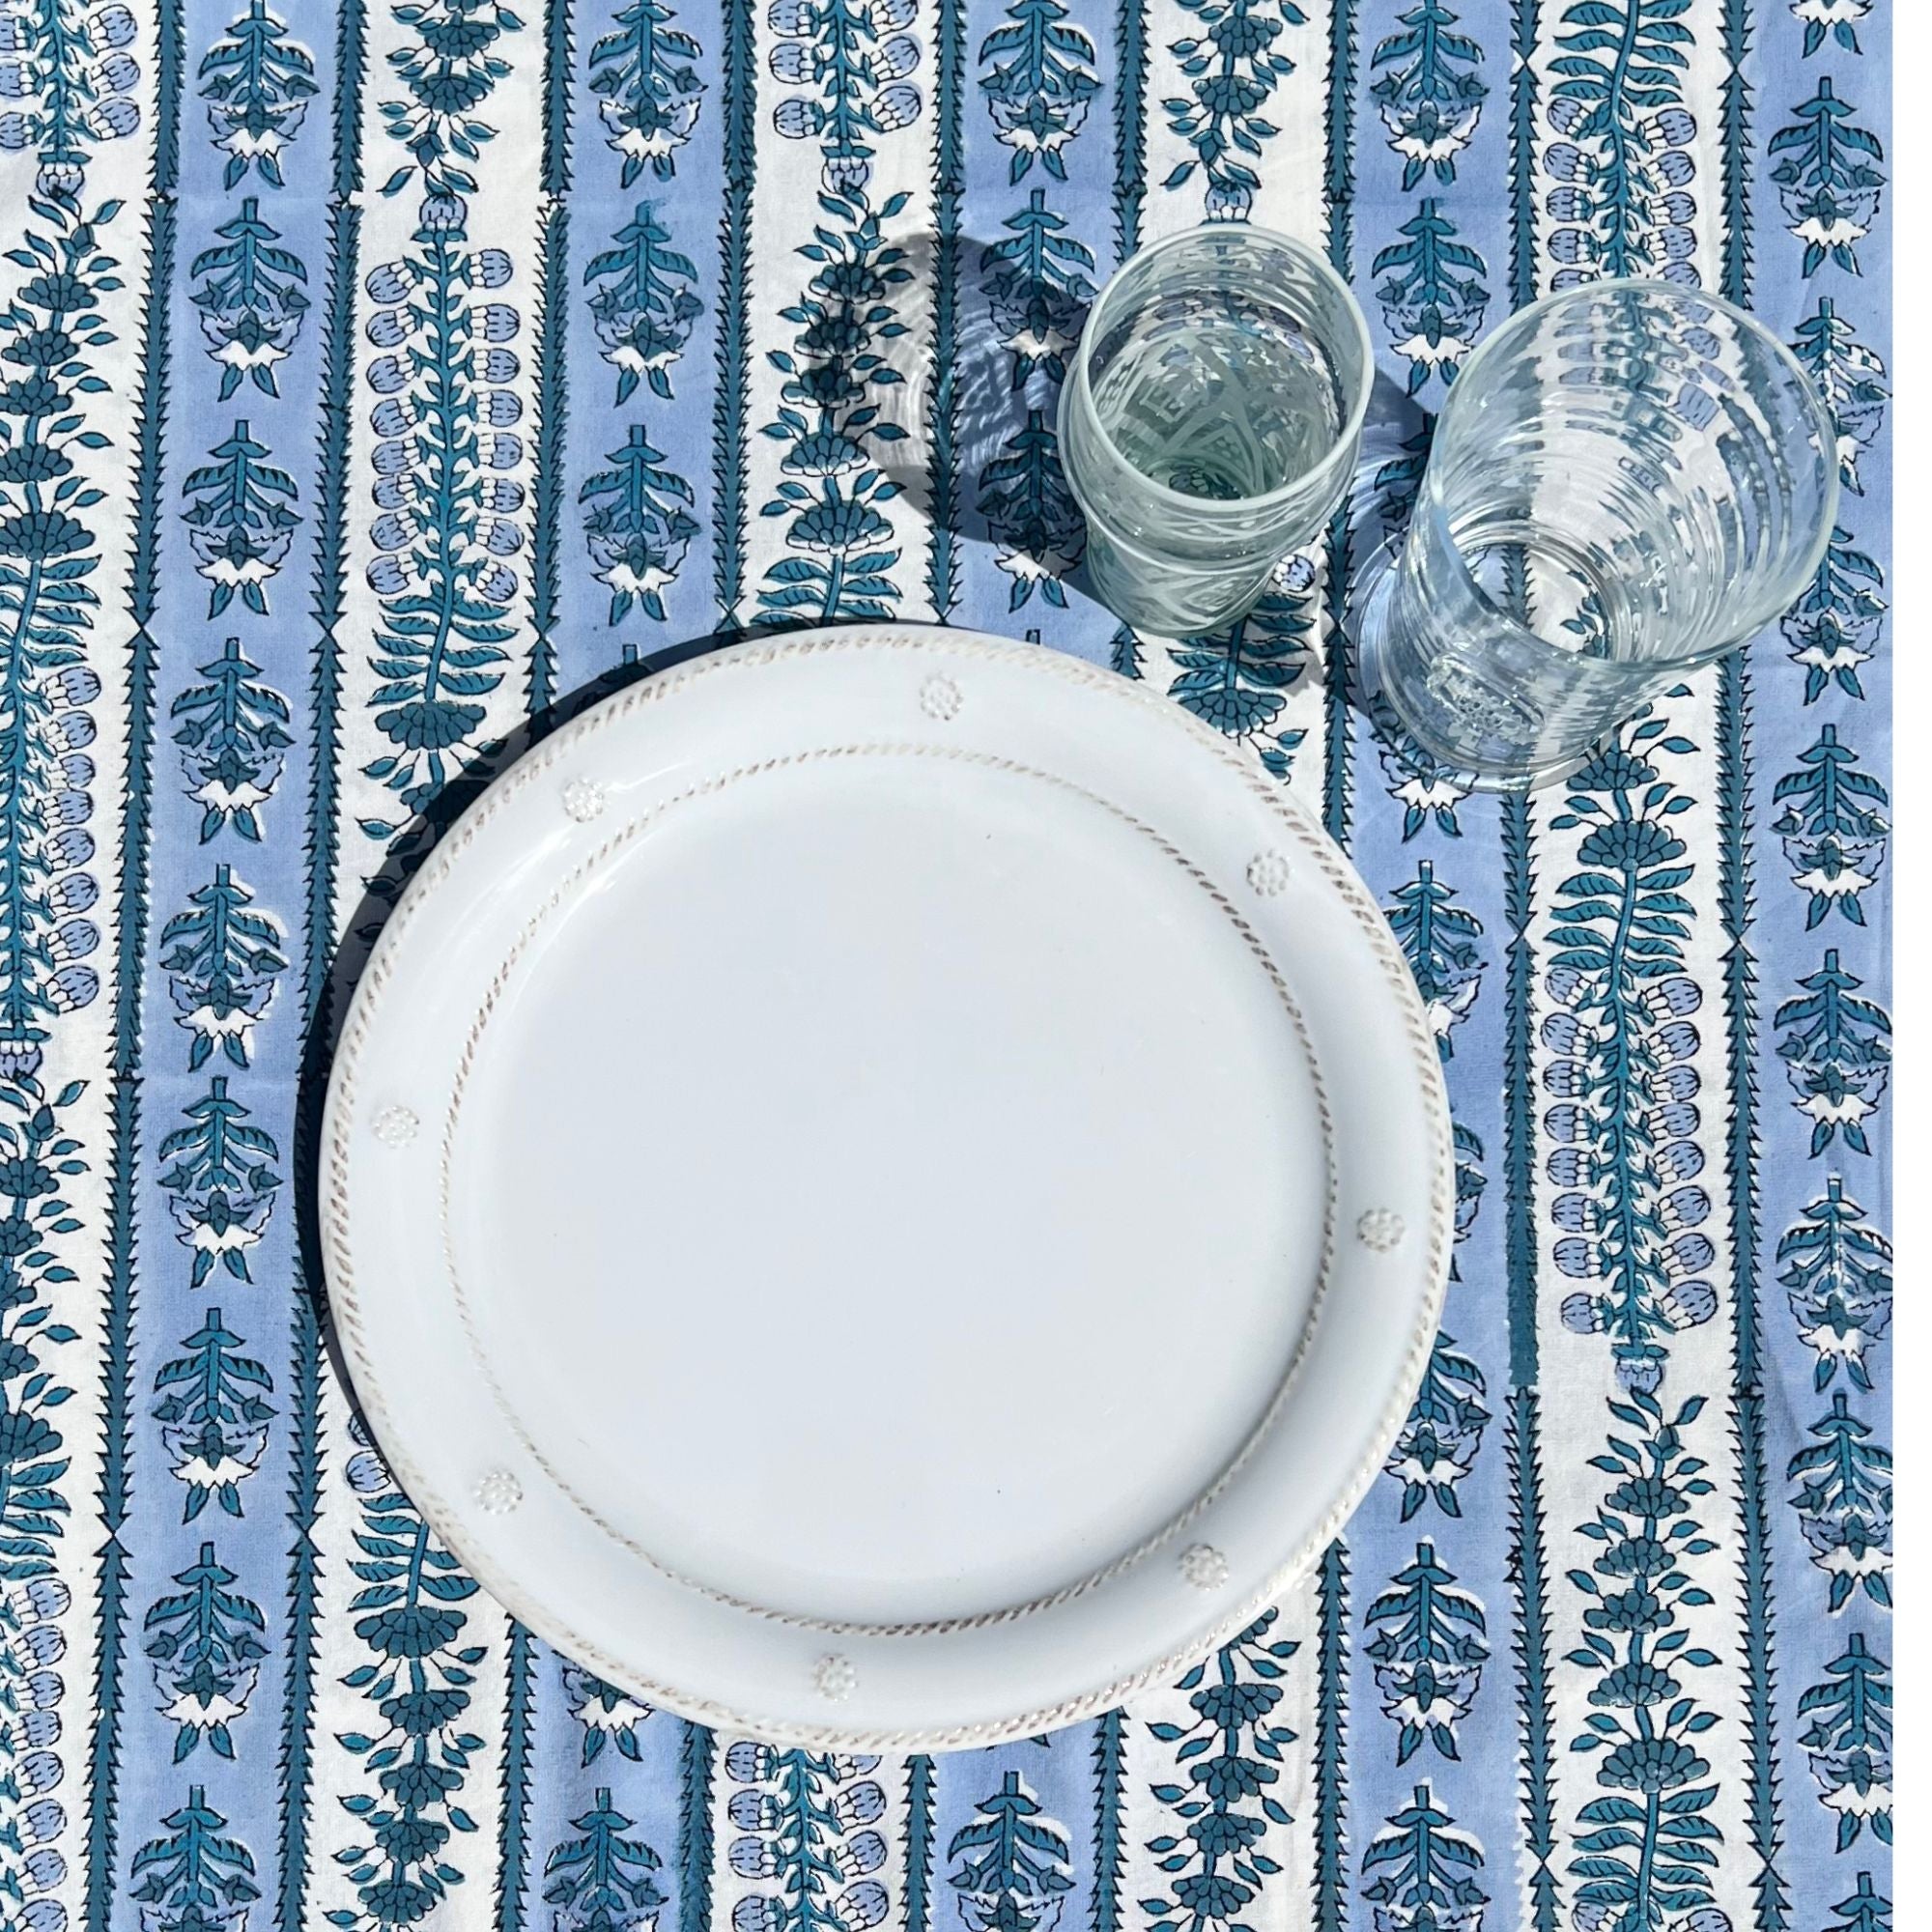 Delphine Block Print Abigail Fox Tablecloth - Abigail Fox Designs